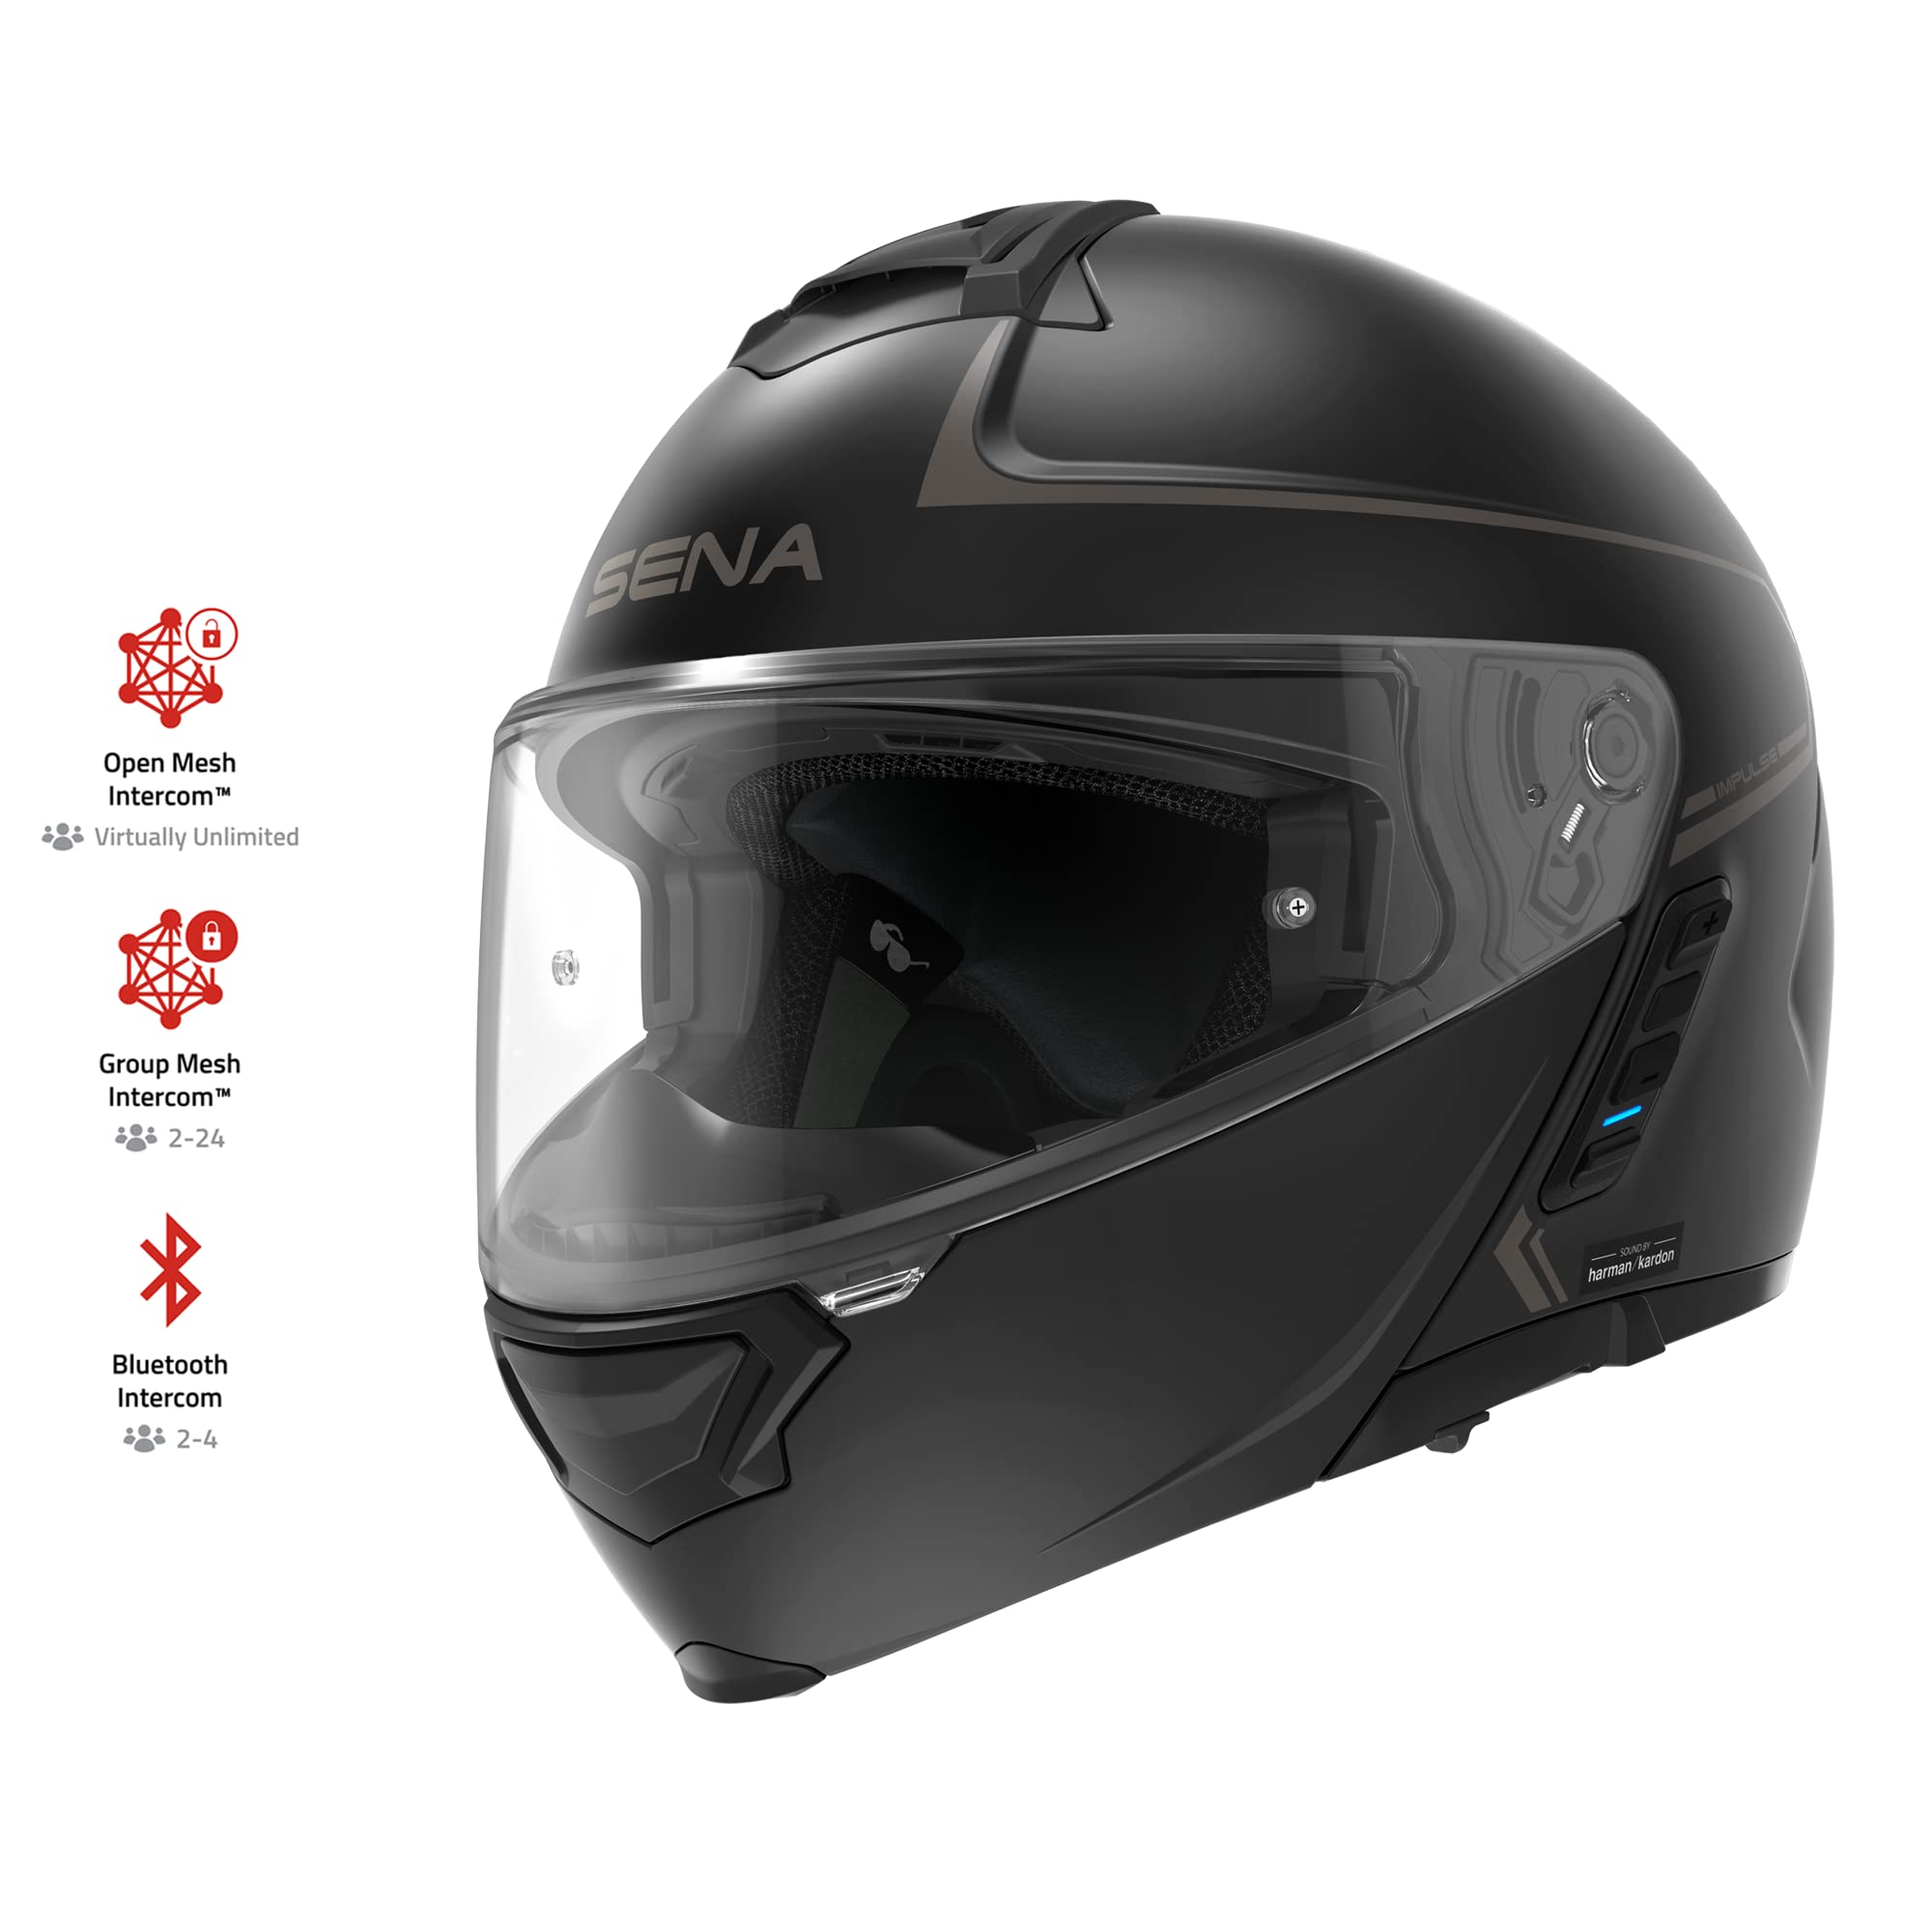 Sena Impulse DOT Flip Up Modular Bluetooth Helmet w/Sound by Harman Kardon Dual Visor Helmet with Integrated Mesh Intercom System / MP3 / Voice Dial